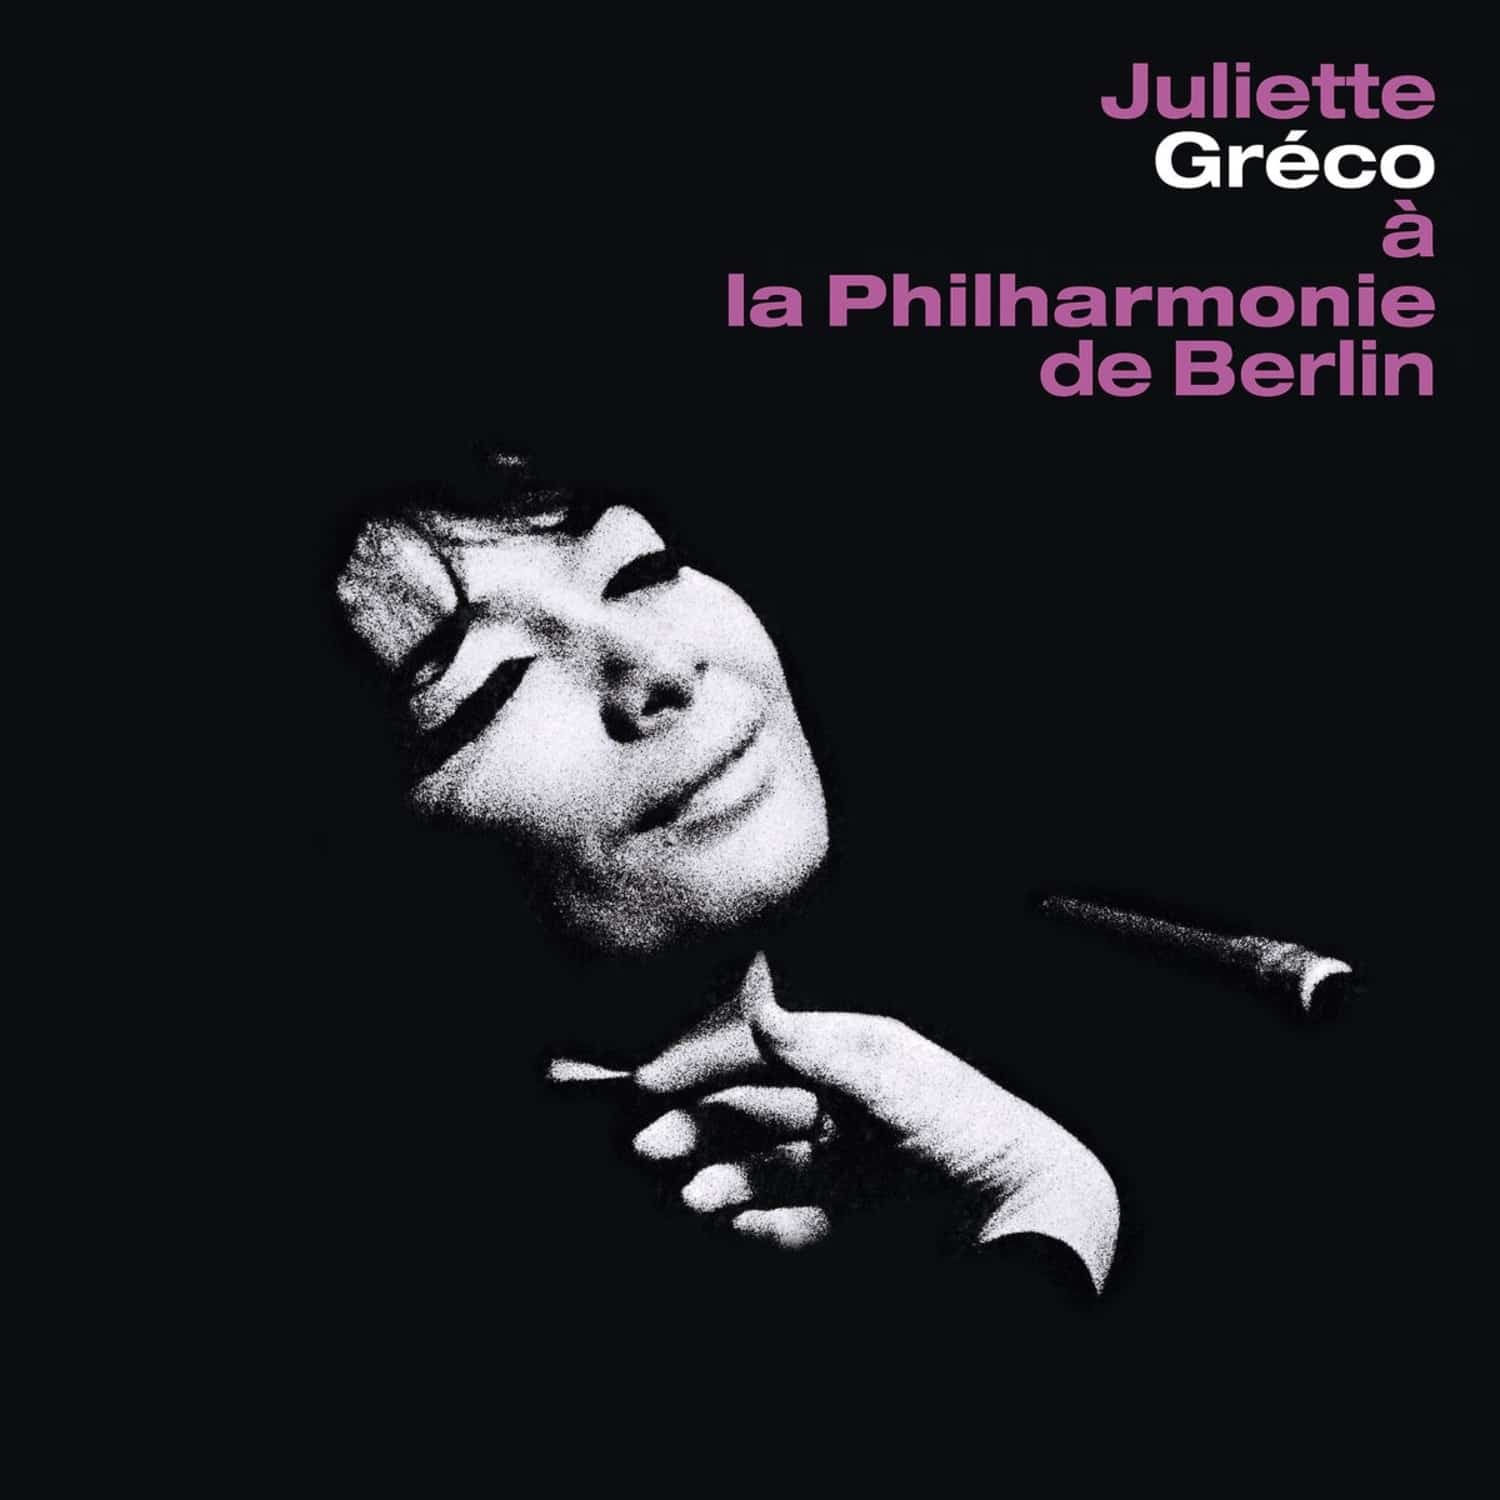 Juliette Greco - JULIETTE GRECO A LA PHILHARMONIE DE BERLIN 